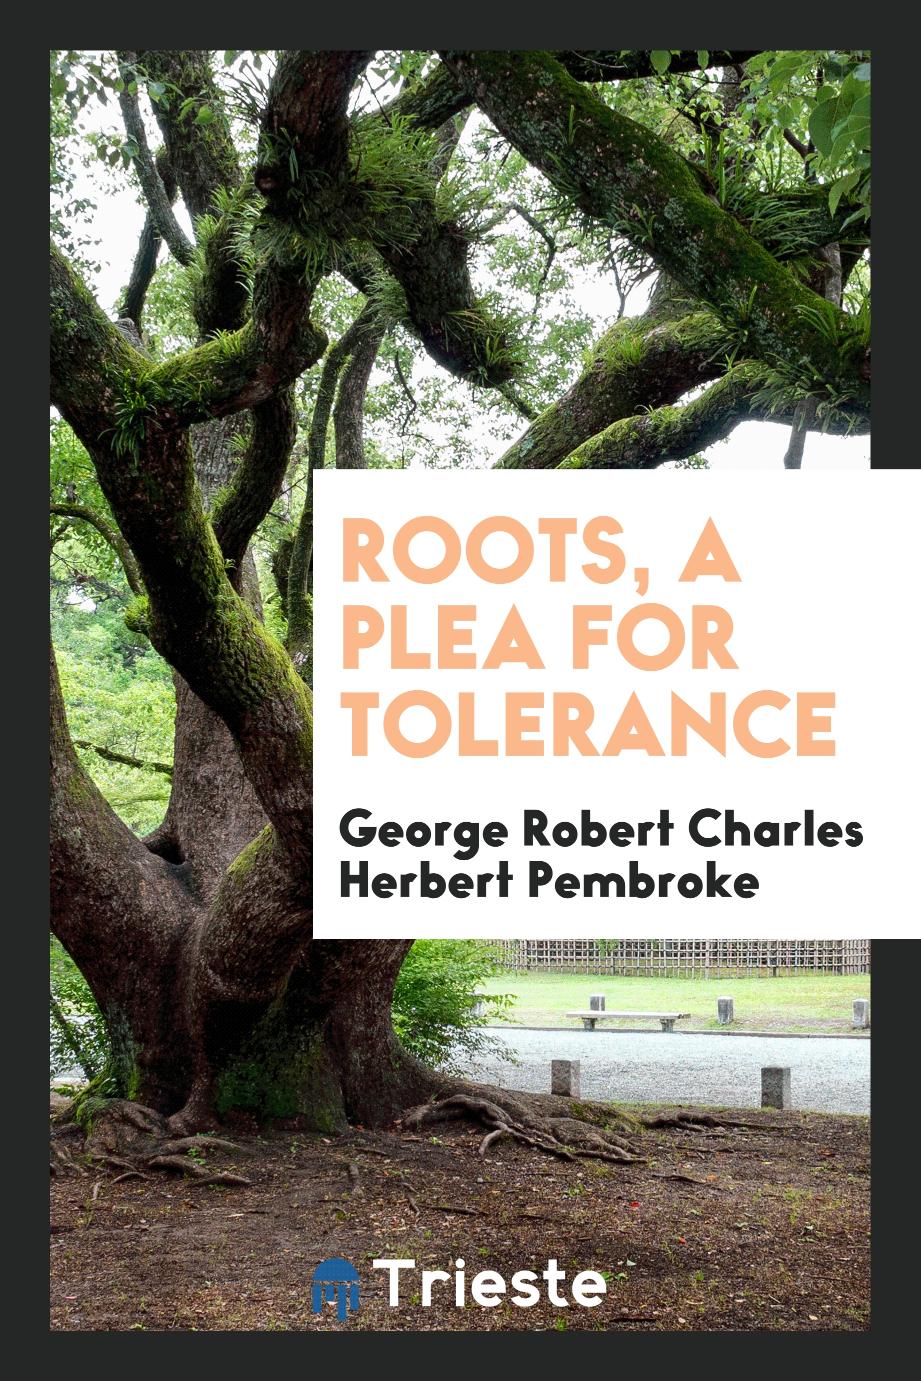 Roots, a plea for tolerance